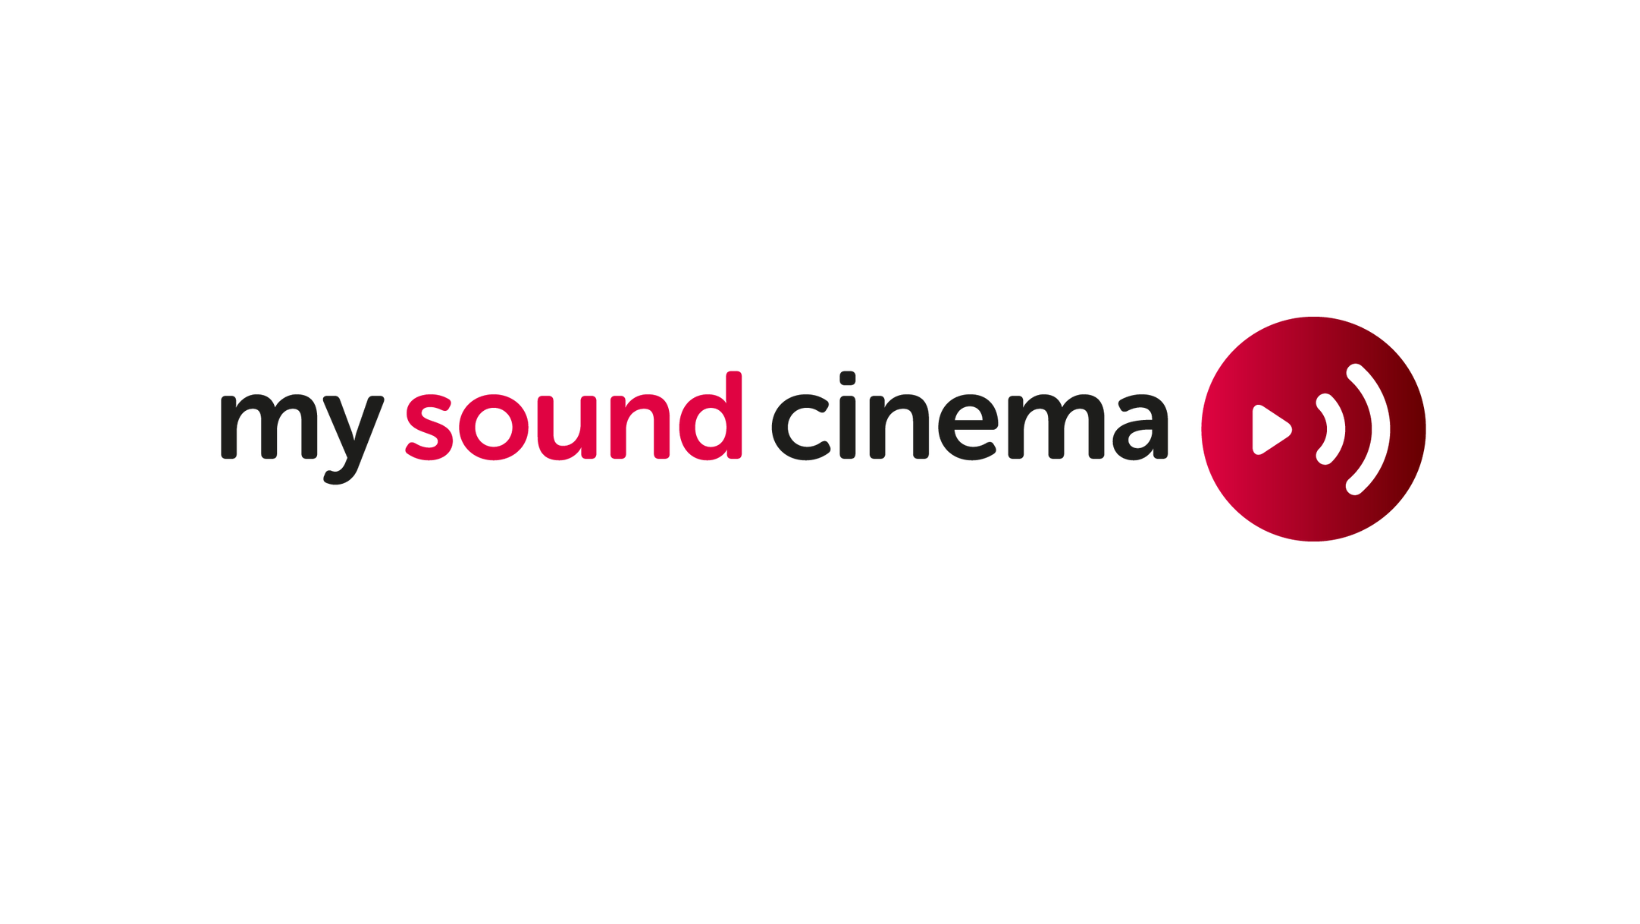 My sound cinema logo